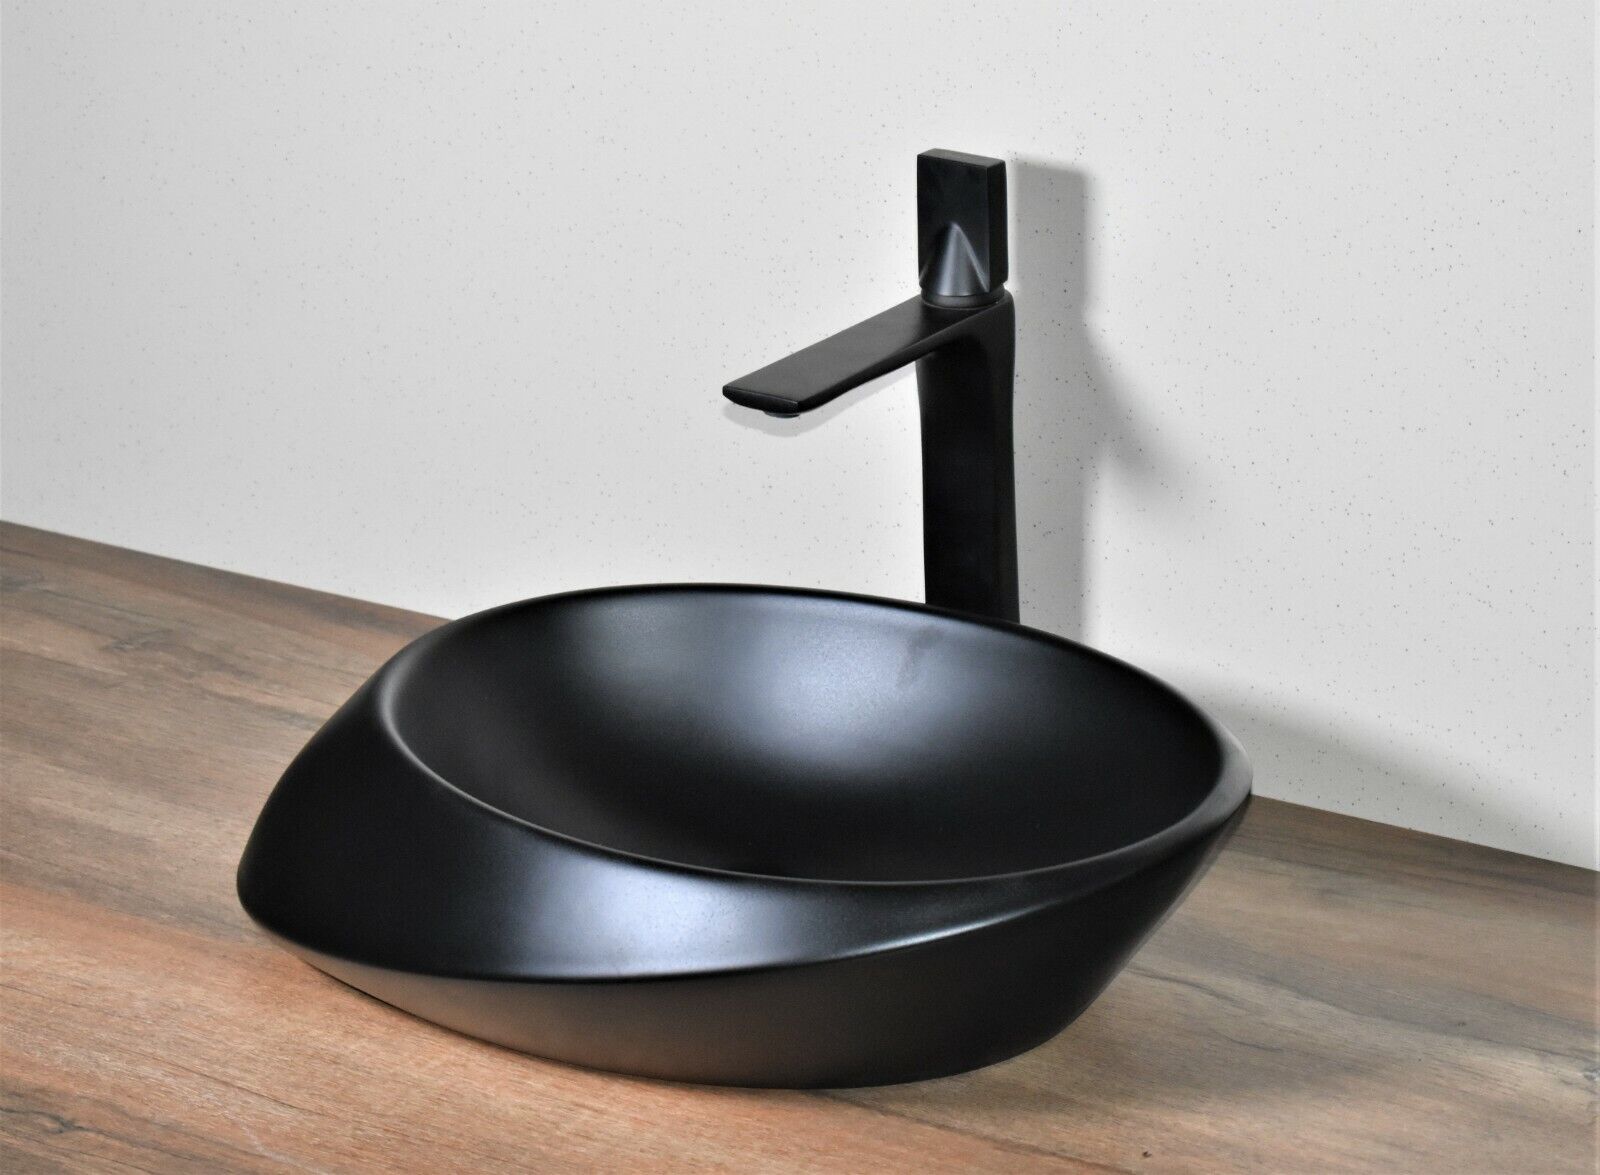 InArt Vessel Sink porcelain/Ceramic Above Counter Top Wash Basin Bathroom Vessel Sink Bowl For Lavatory 21 x 15 x 6 Inch (Black Matt)